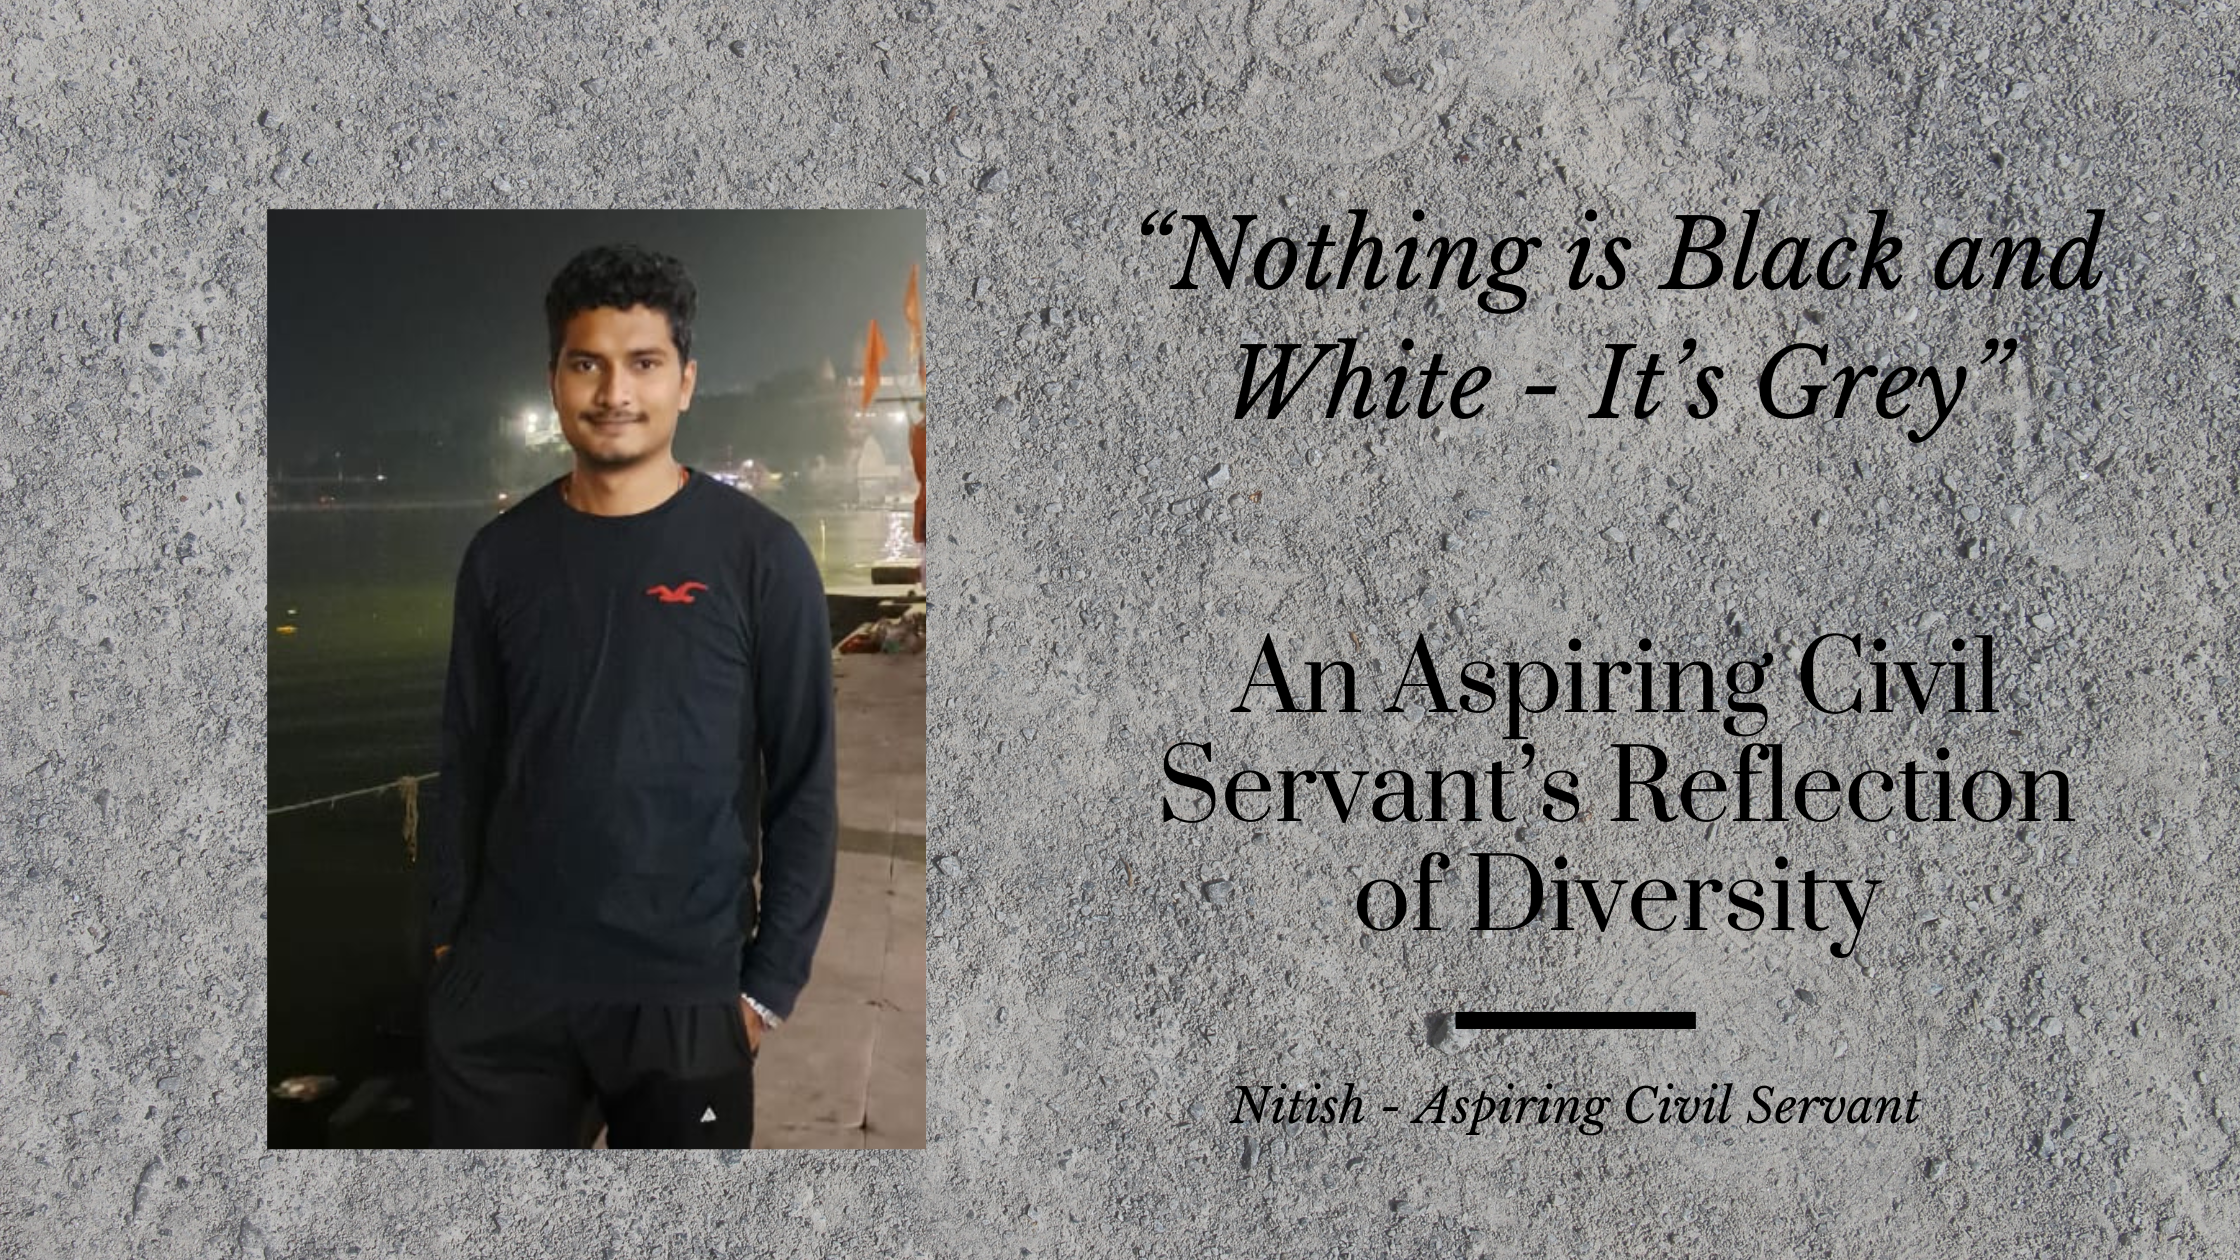 An Aspiring Civil Servant’s Reflection of Diversity